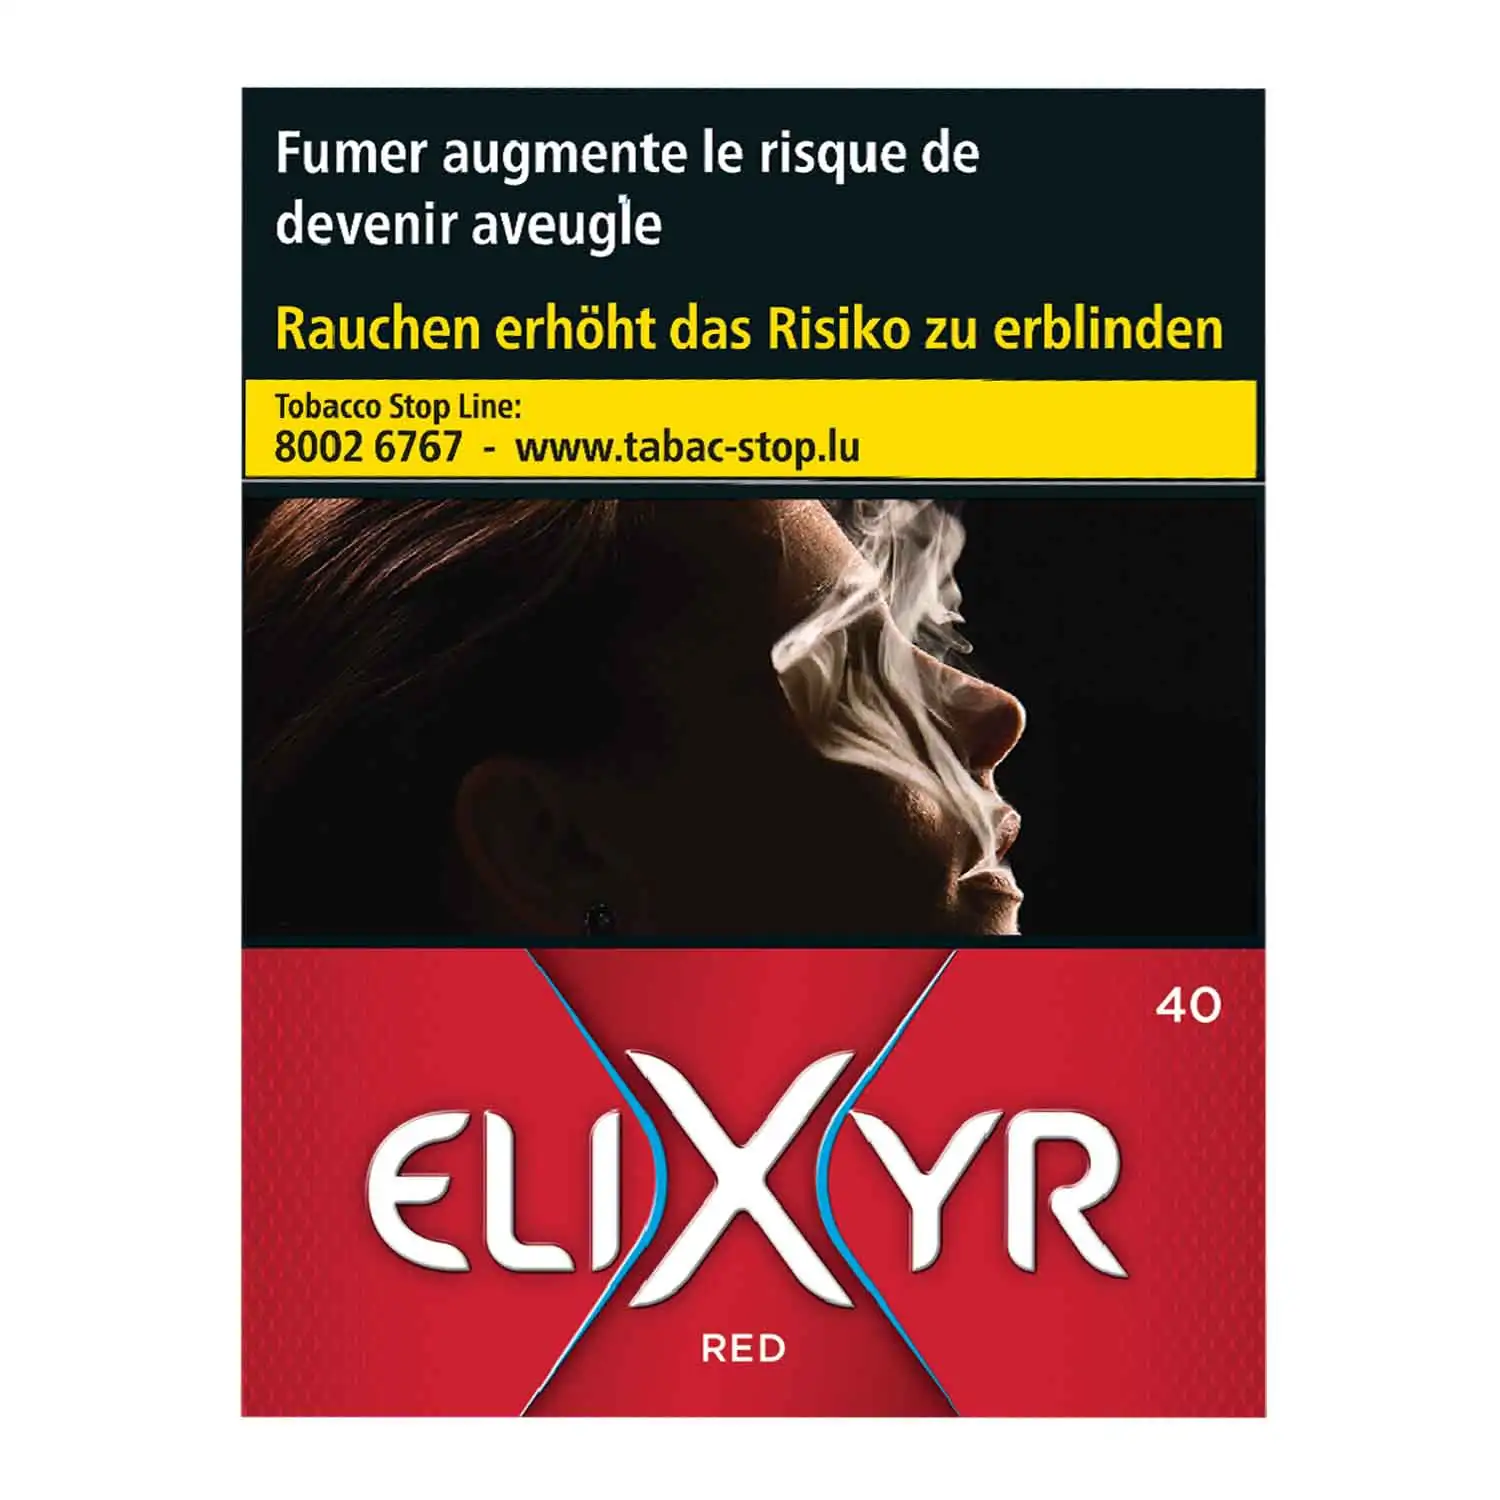 Elixyr red 40 - Buy at Real Tobacco